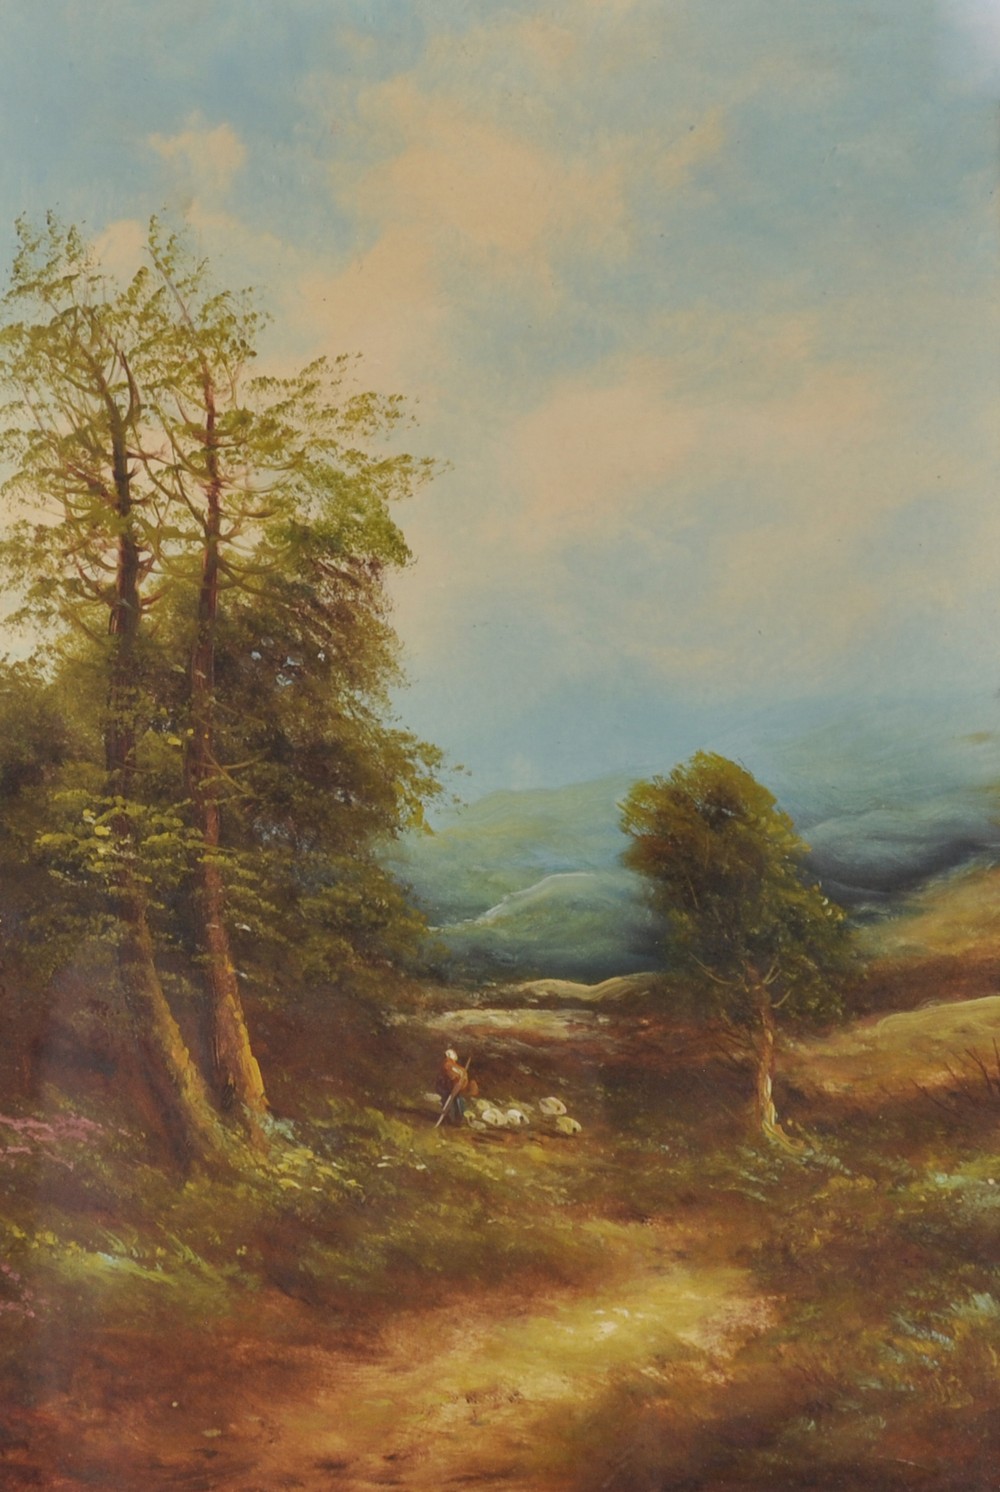 Late 19th Century School. Shepherdess in a Landscape, Oil on Board, Indistinctly Signed, 19.5" x